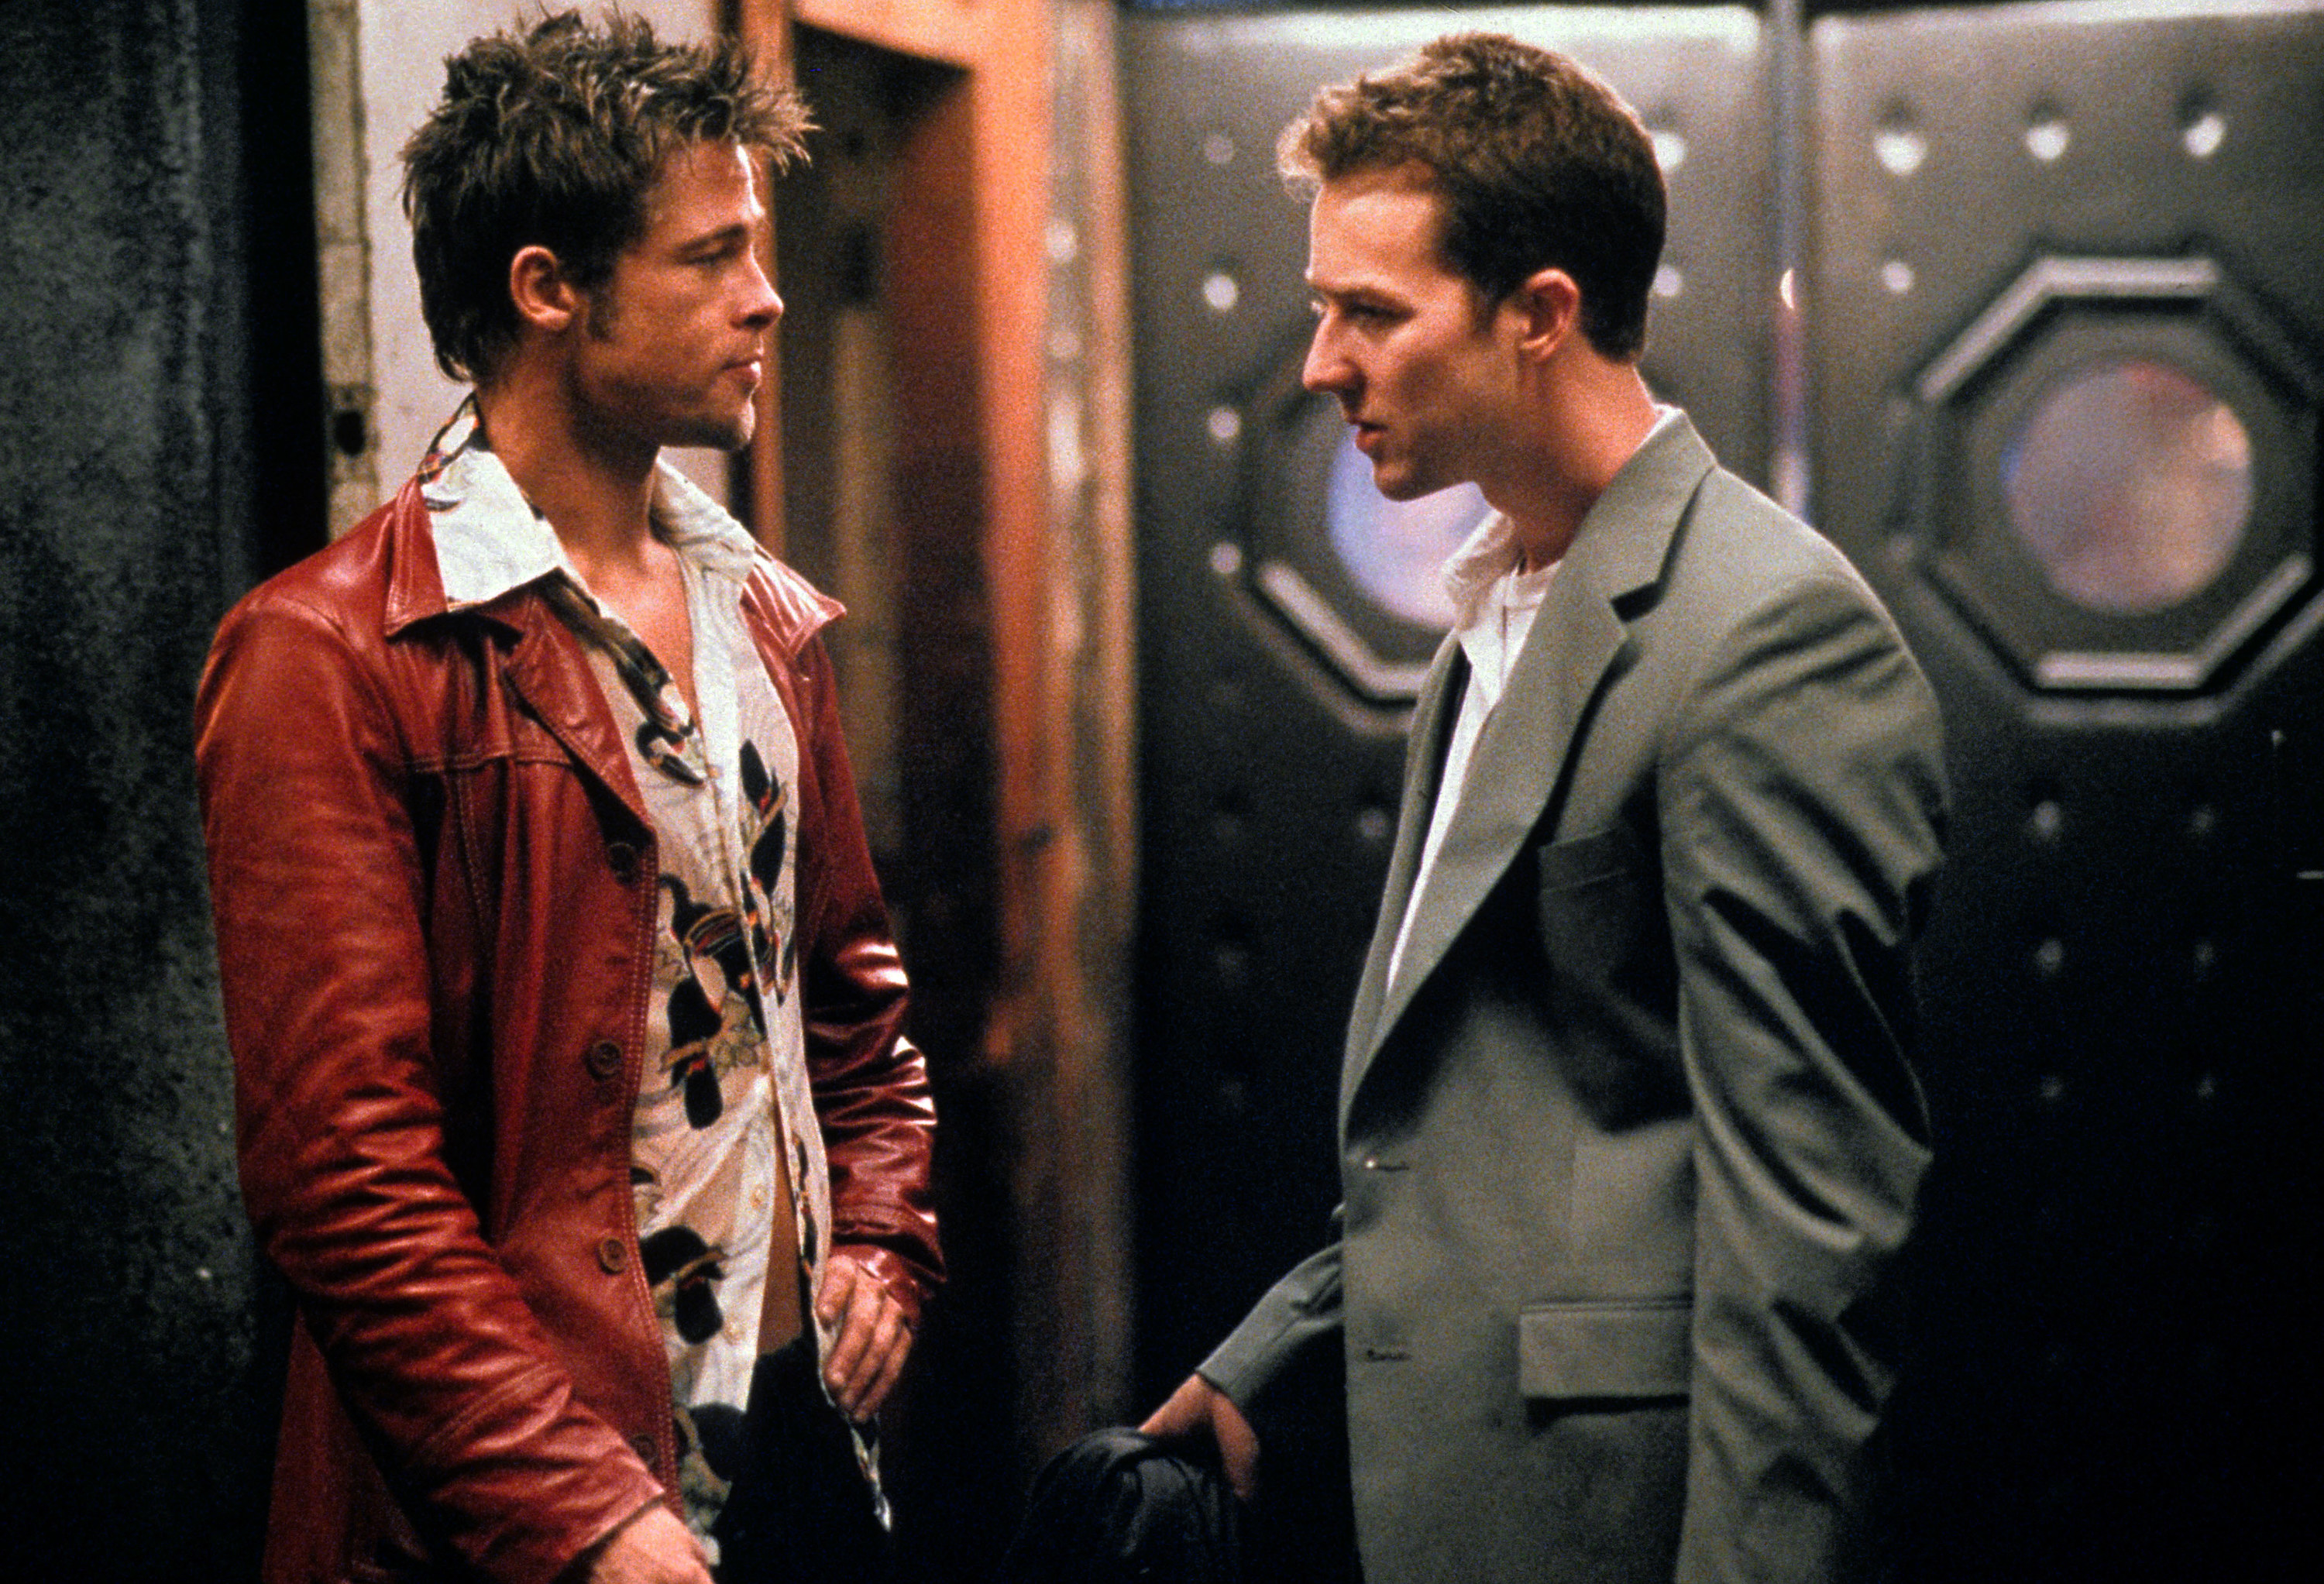 Brad Pitt and Edward Norton talking to each other